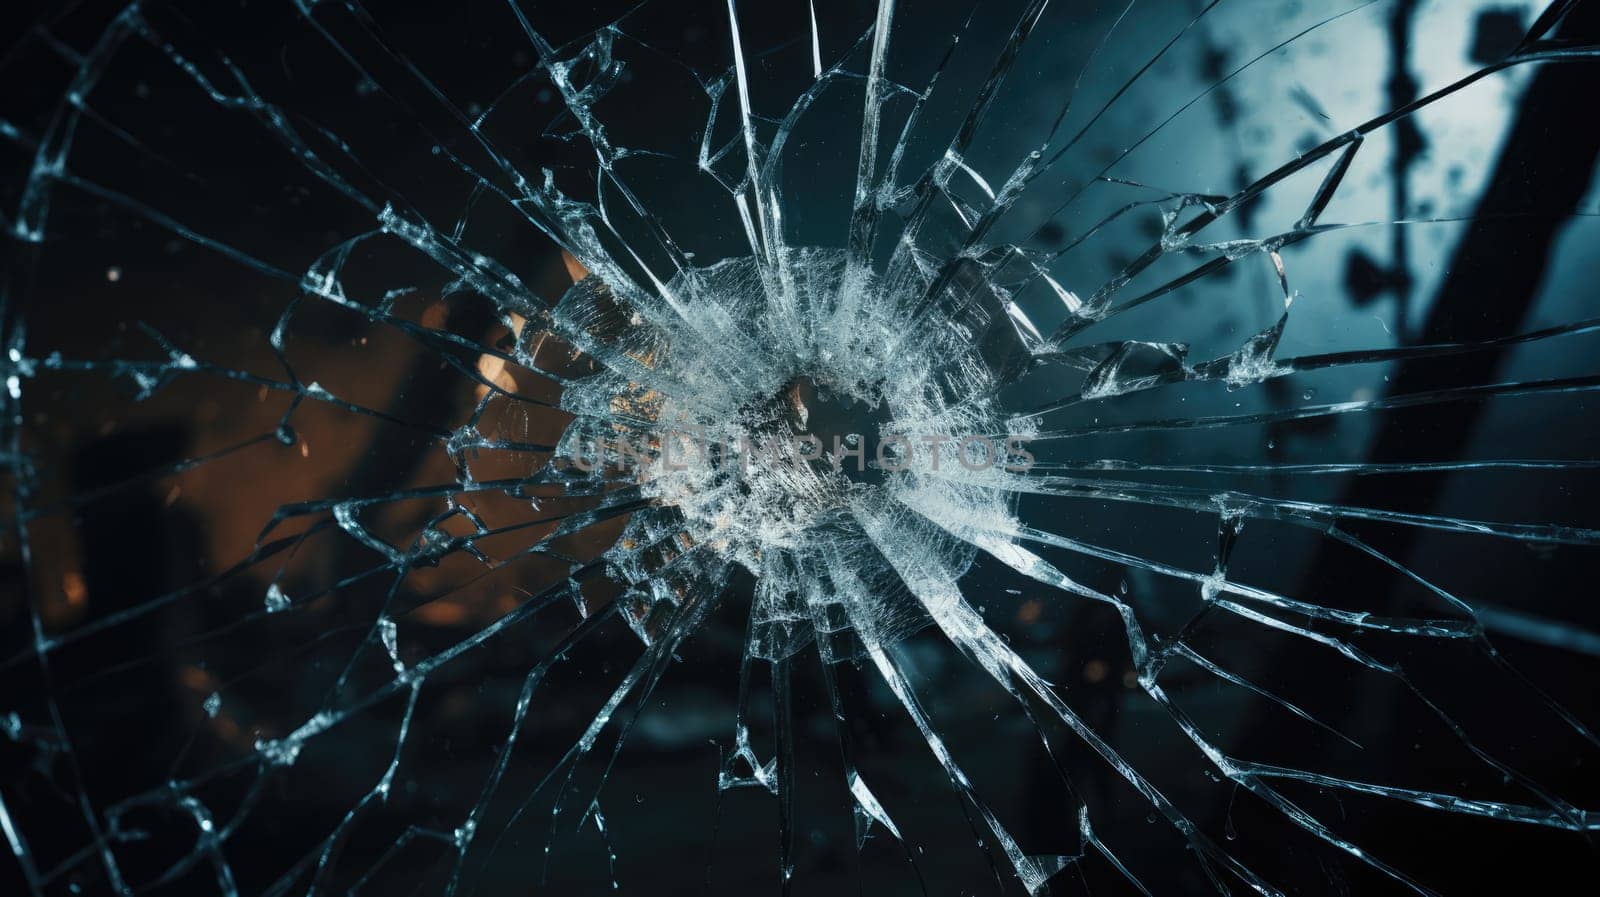 Bullet hole glass abstract background - crime gun shot. AI